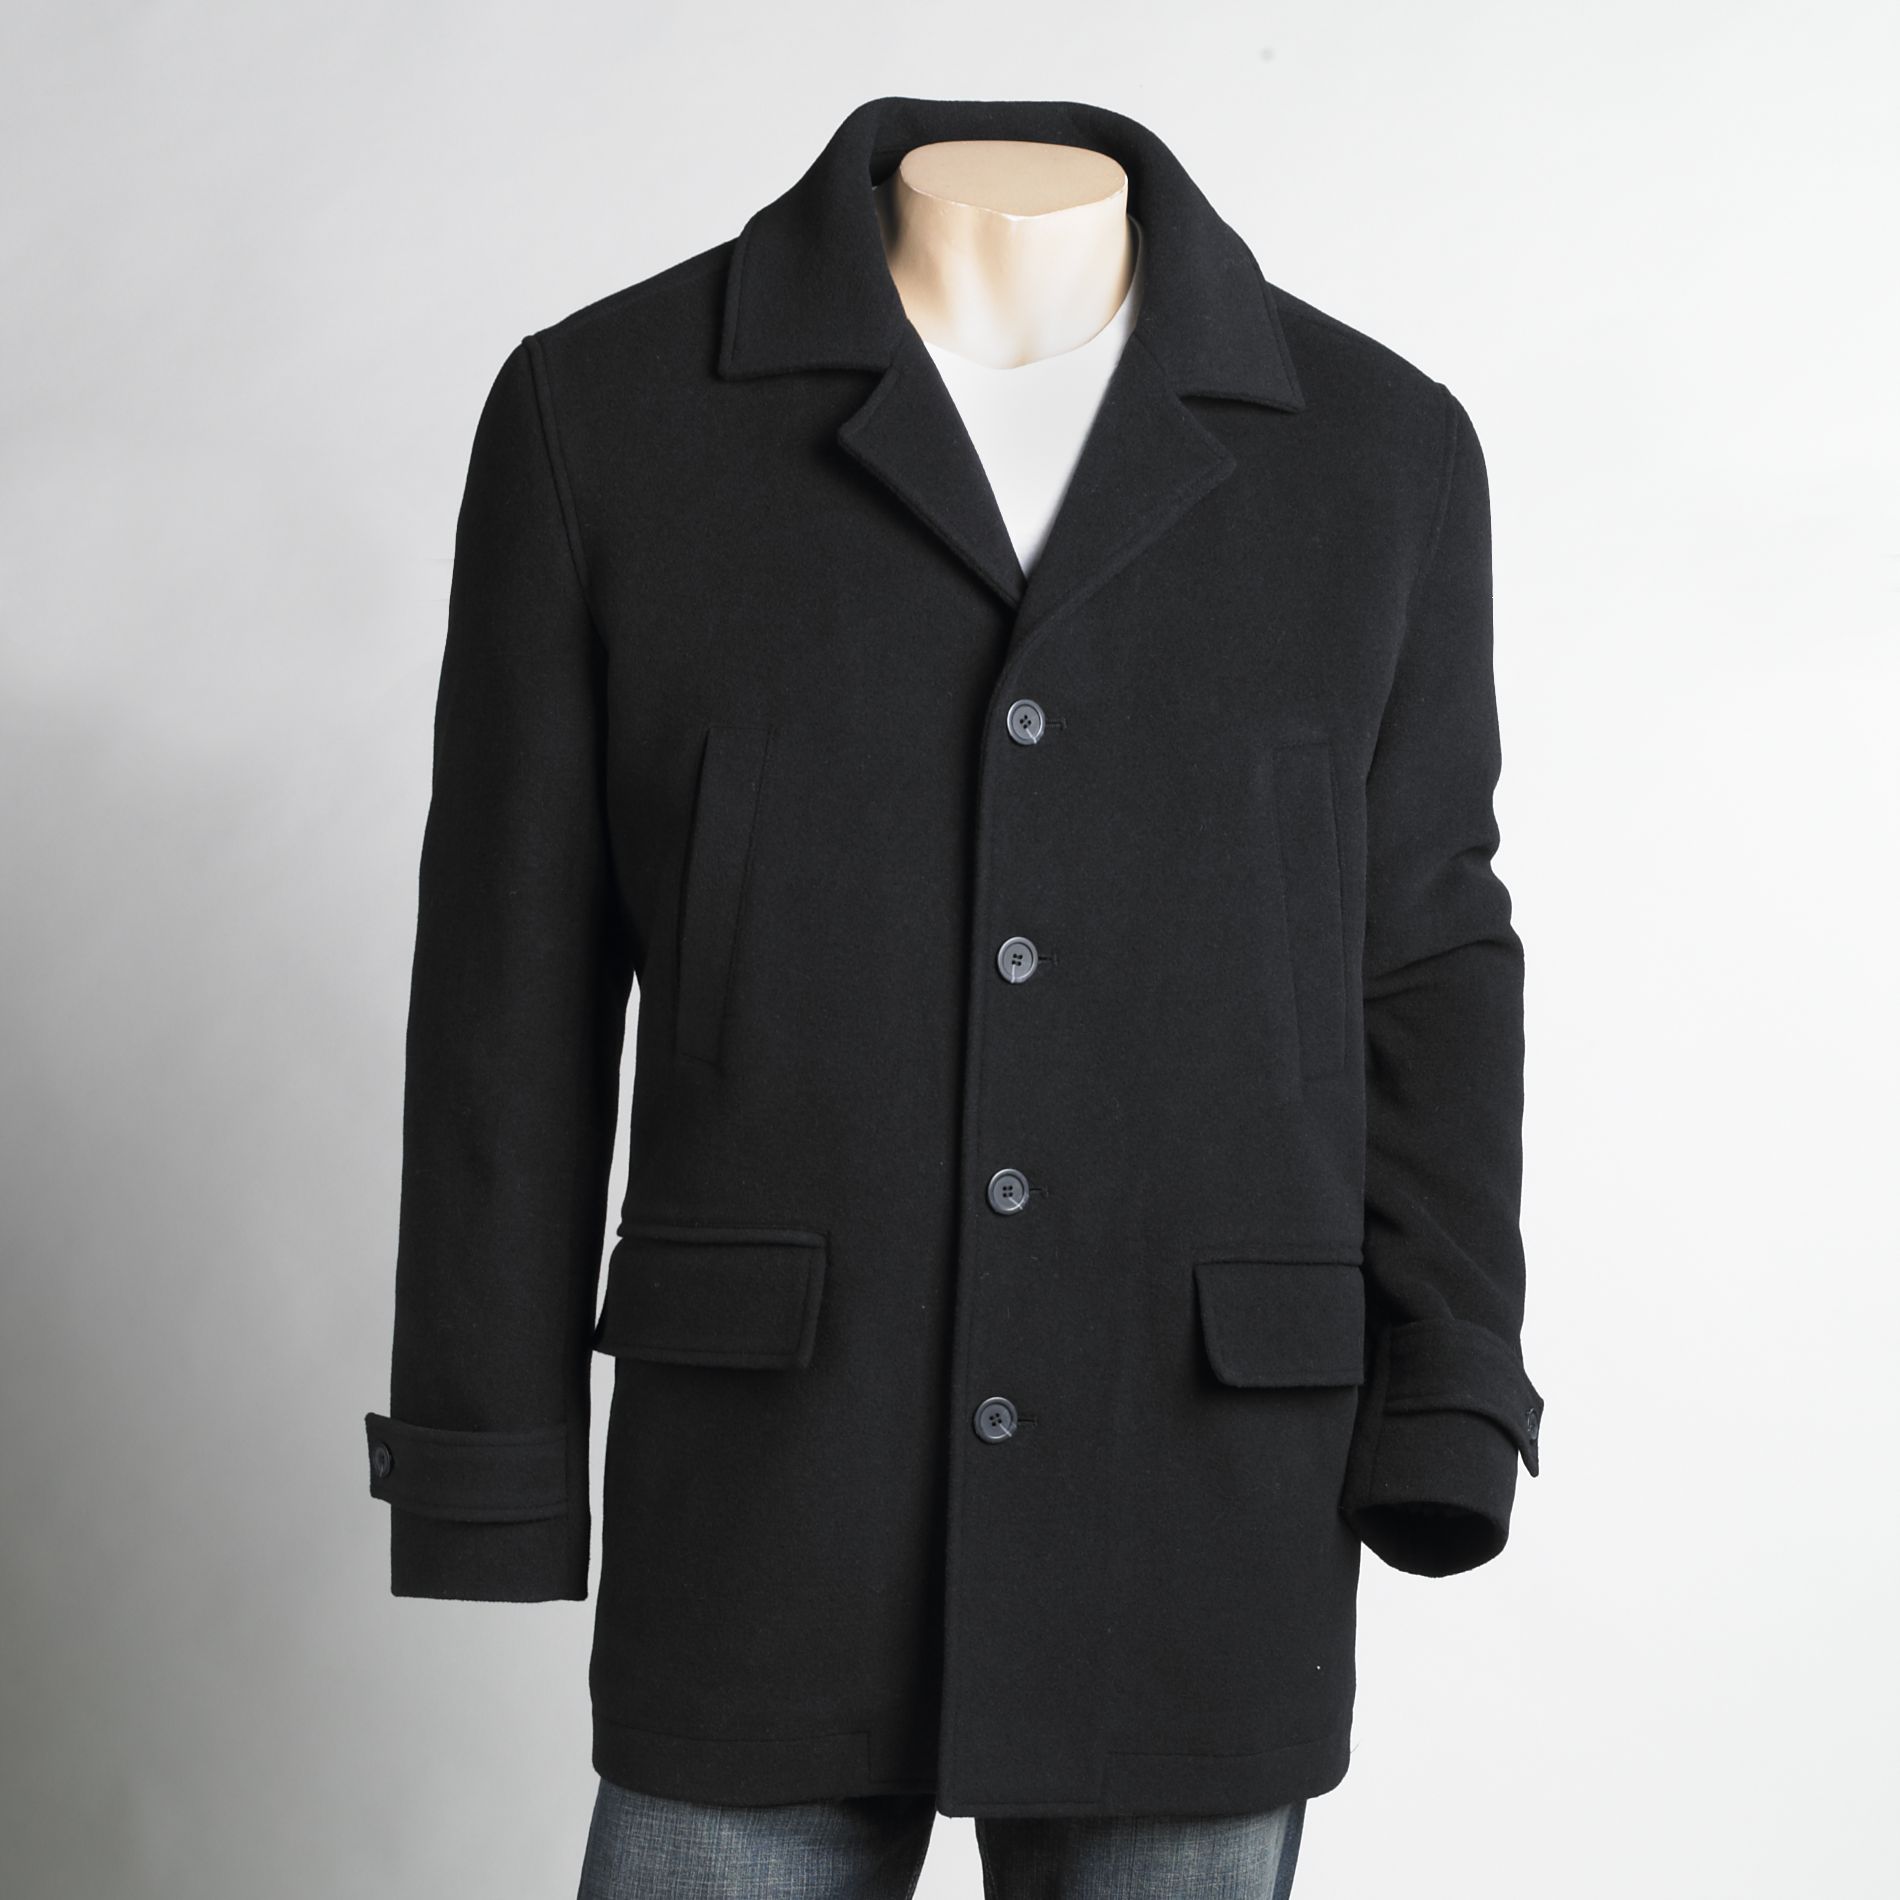 Covington Men's Wool Blend Coat